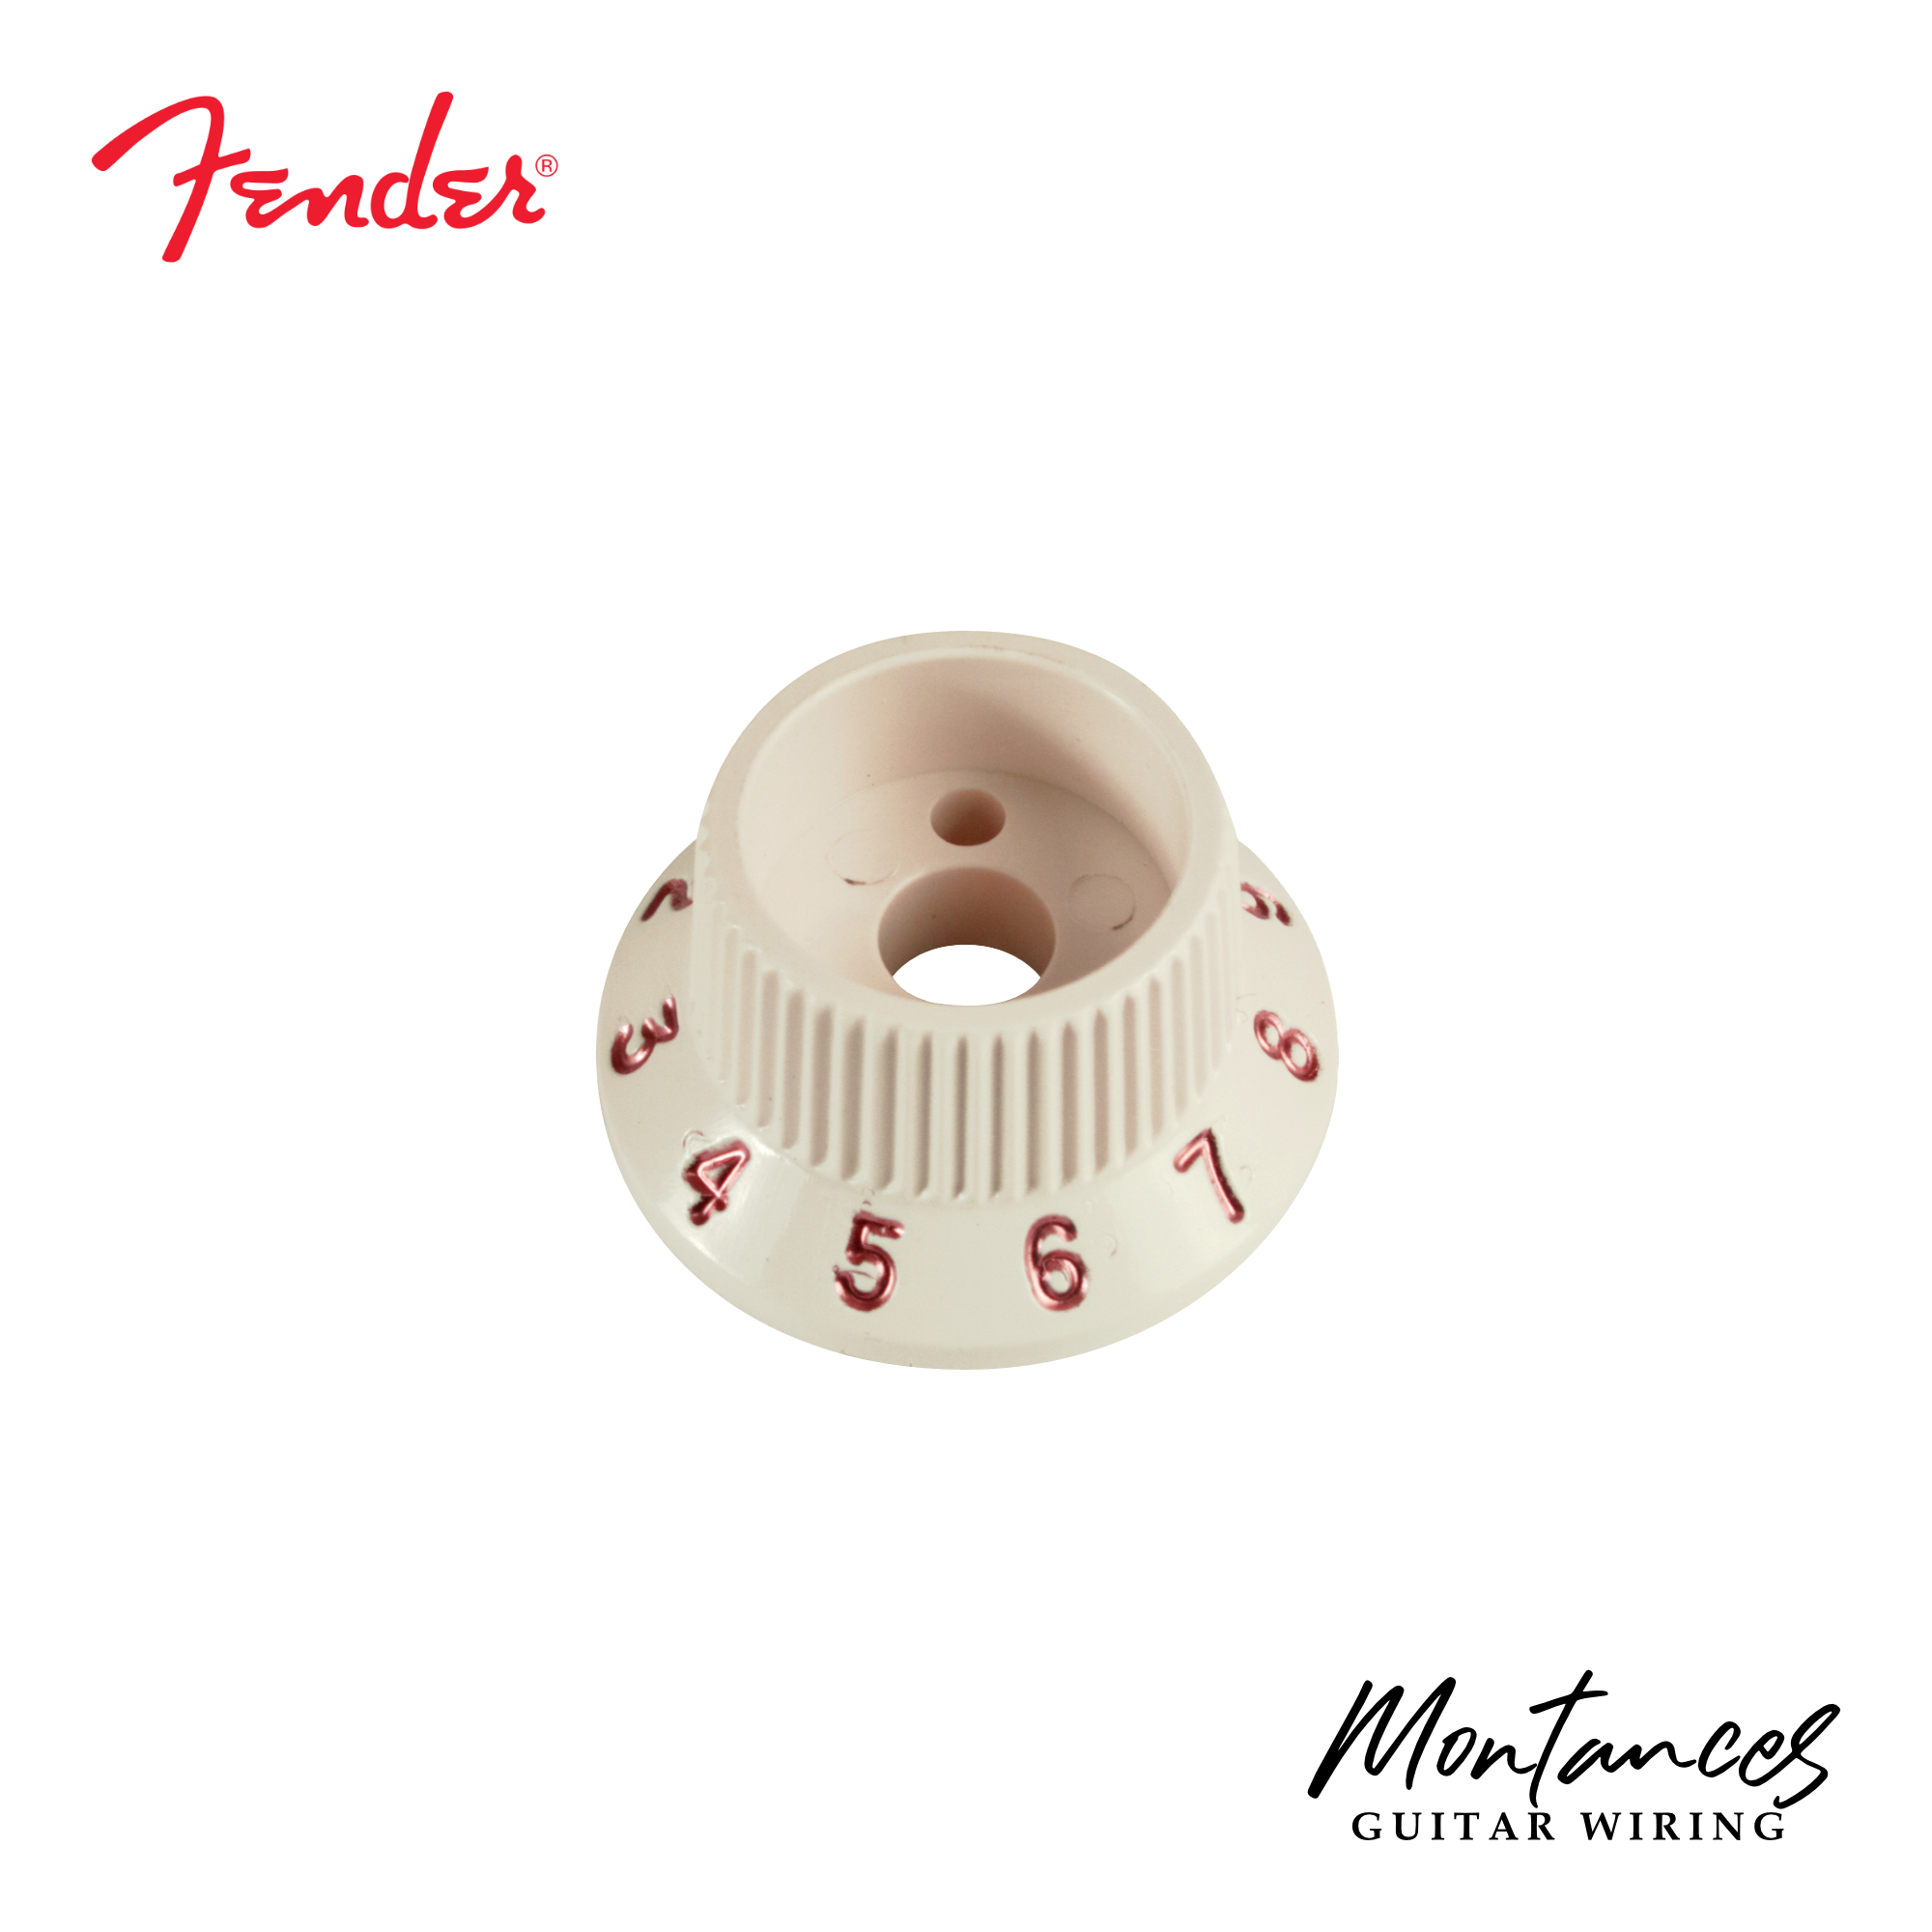 Fender® Knob & Knob Cap for the S-1 Switch